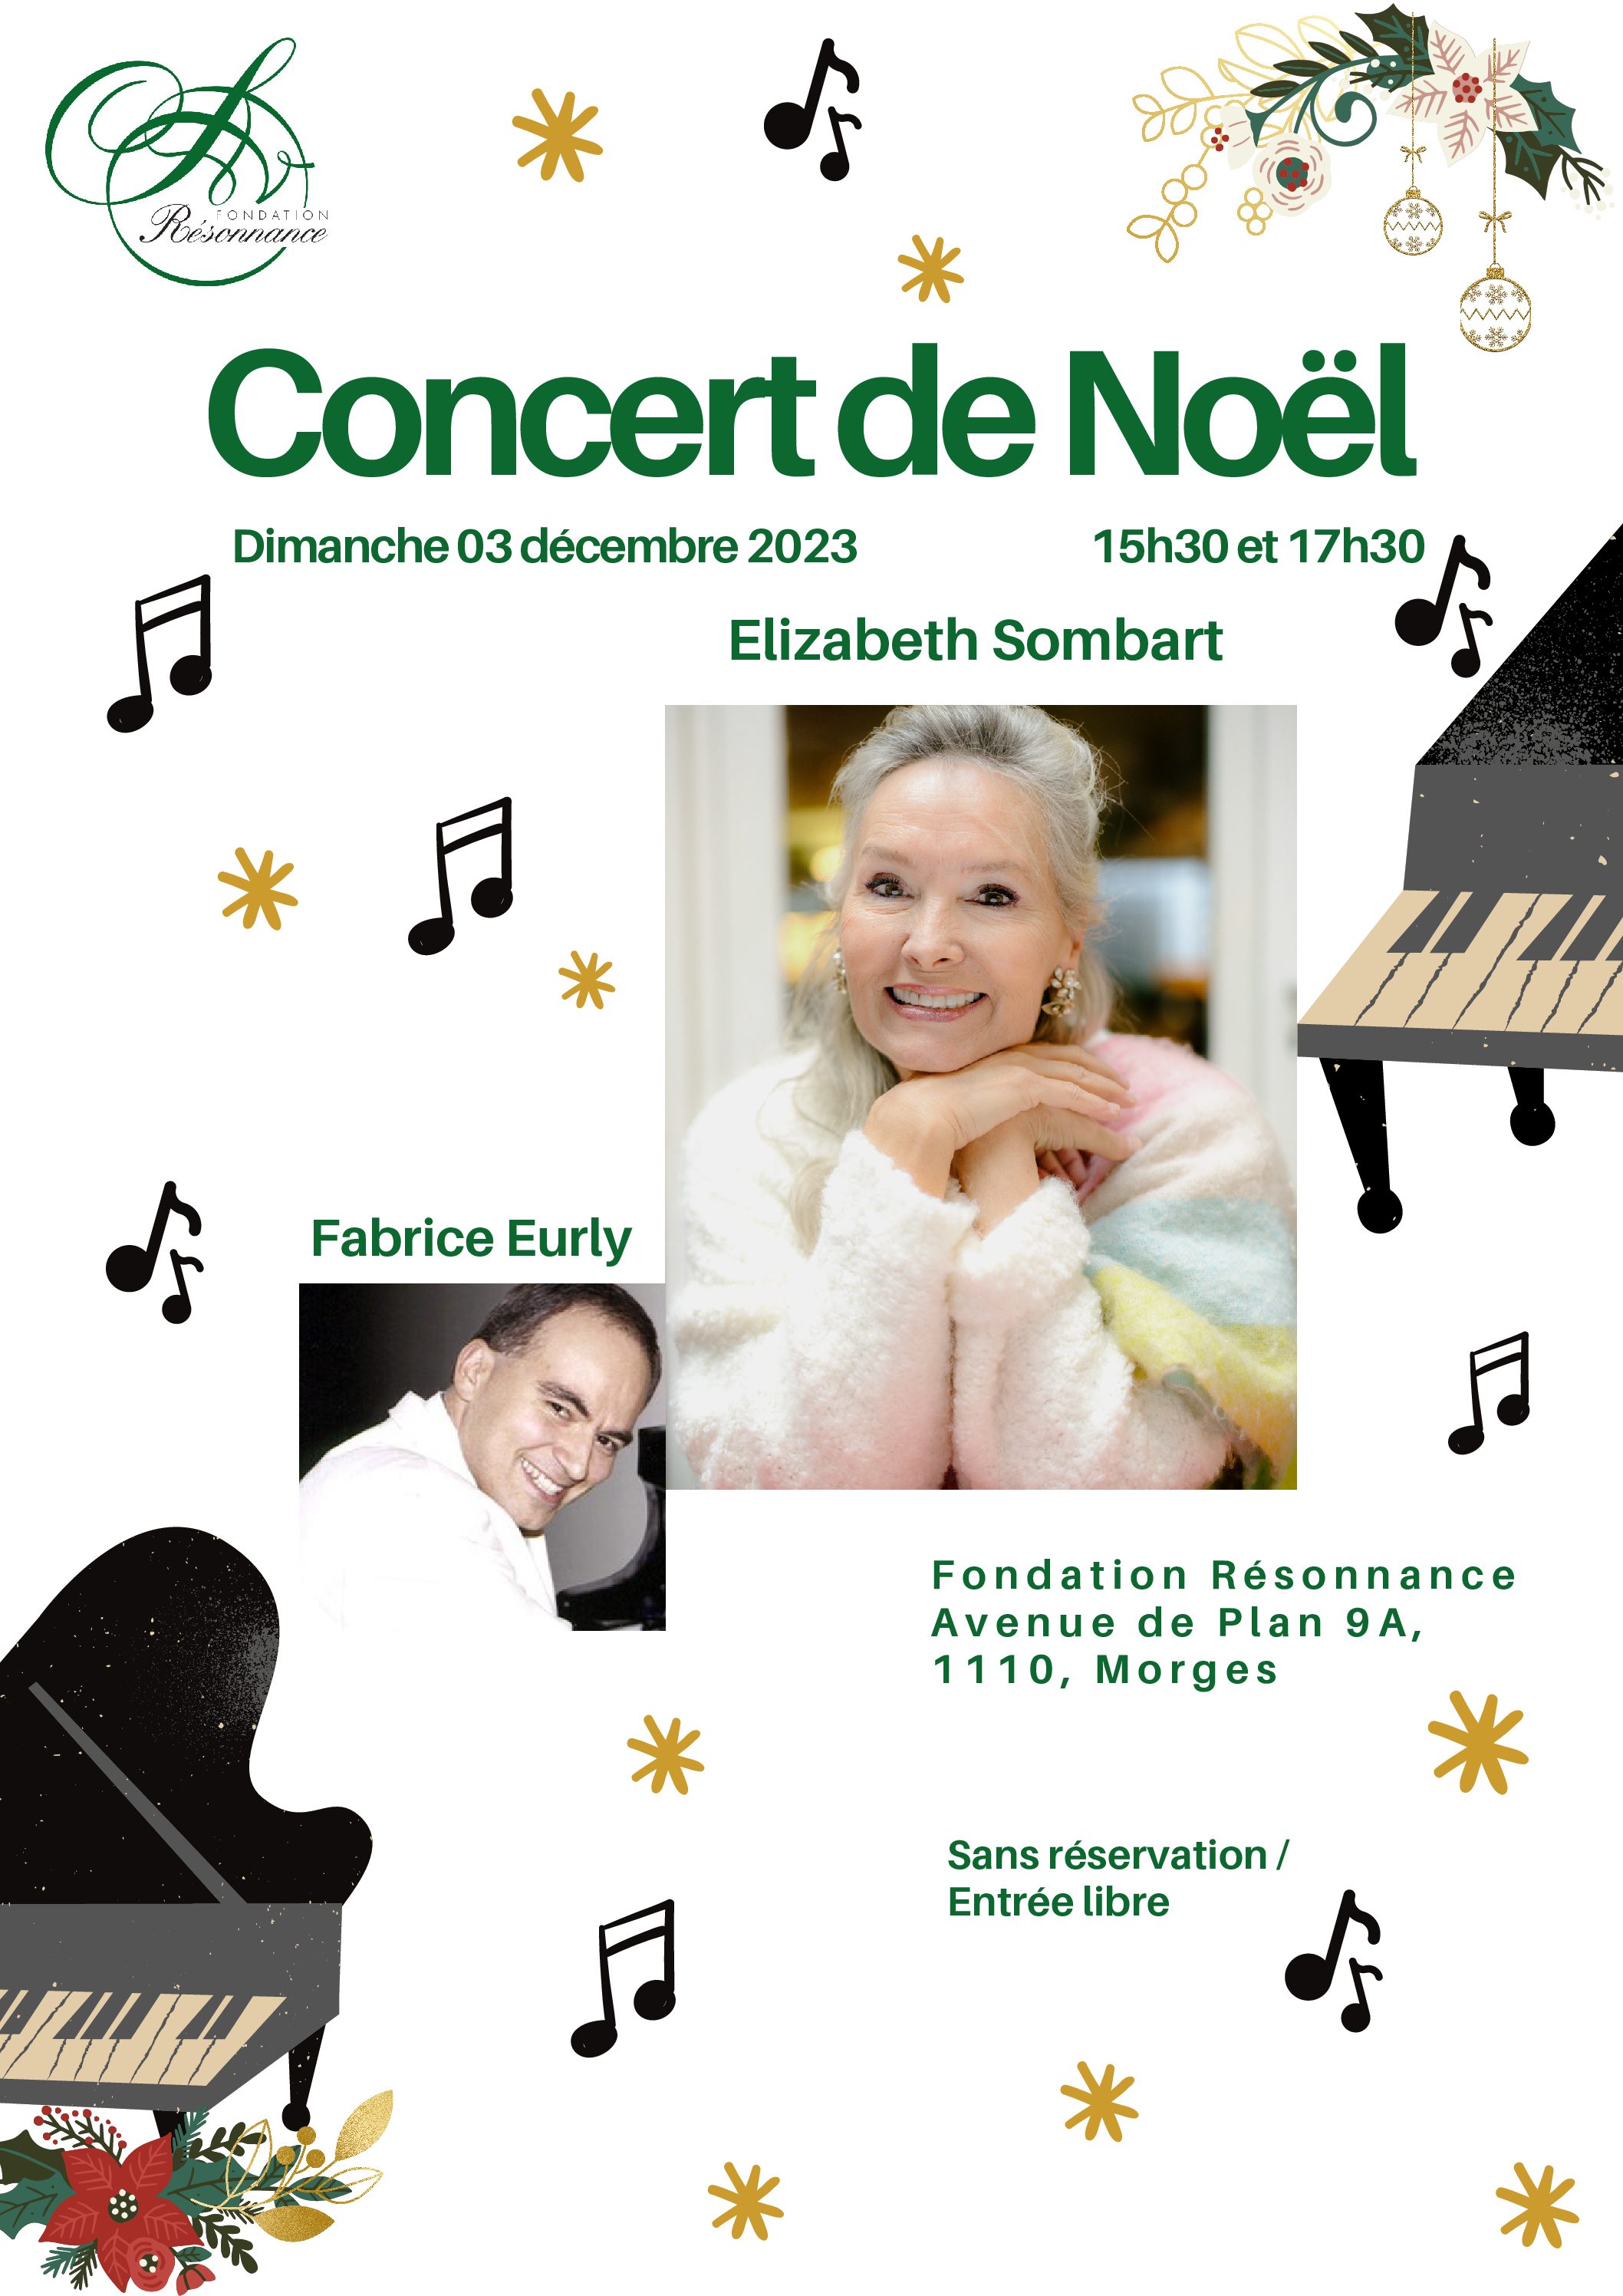 Concert de Noël avec Elisabeth Sombart et Fabrice Eurly